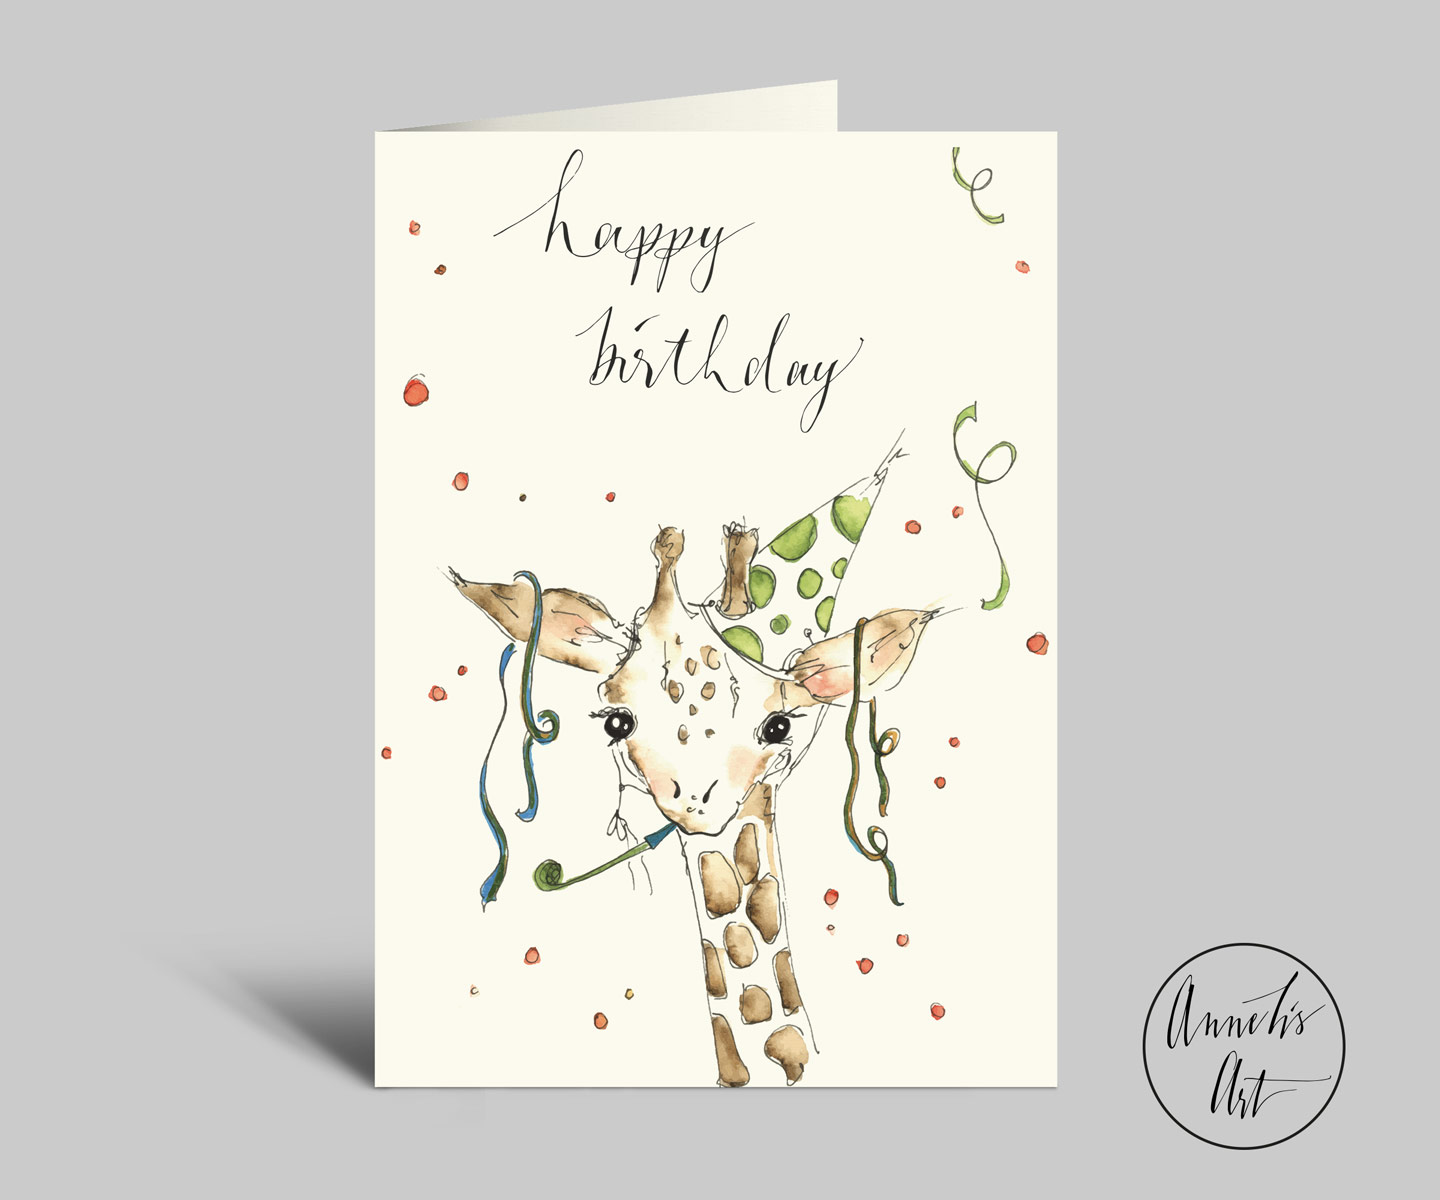 Geburtstagskarte | Happy Birthday | Giraffe macht Party | Klappkarte